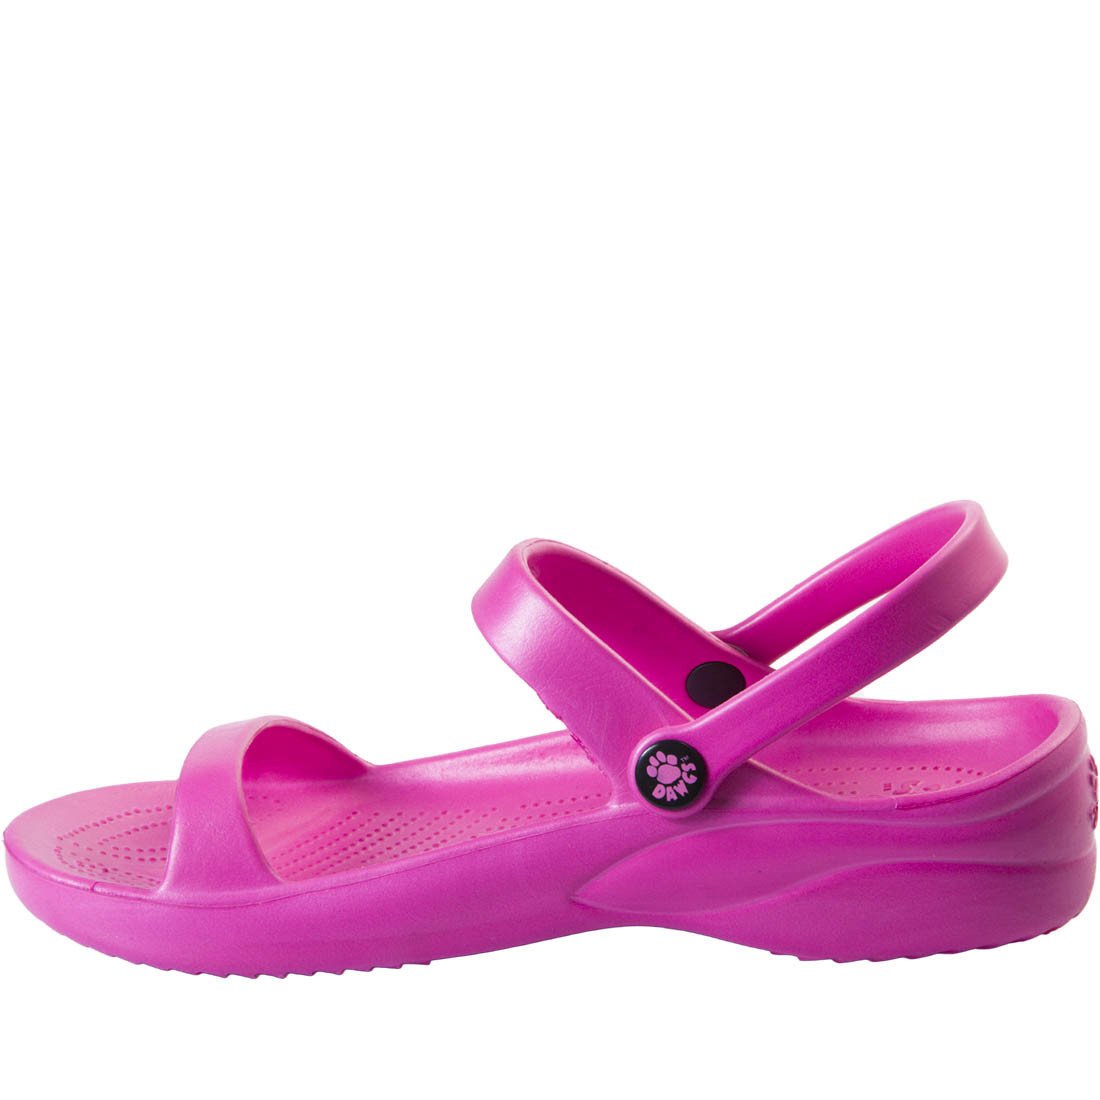 Women's 3-Strap Sandals - Hot Pink